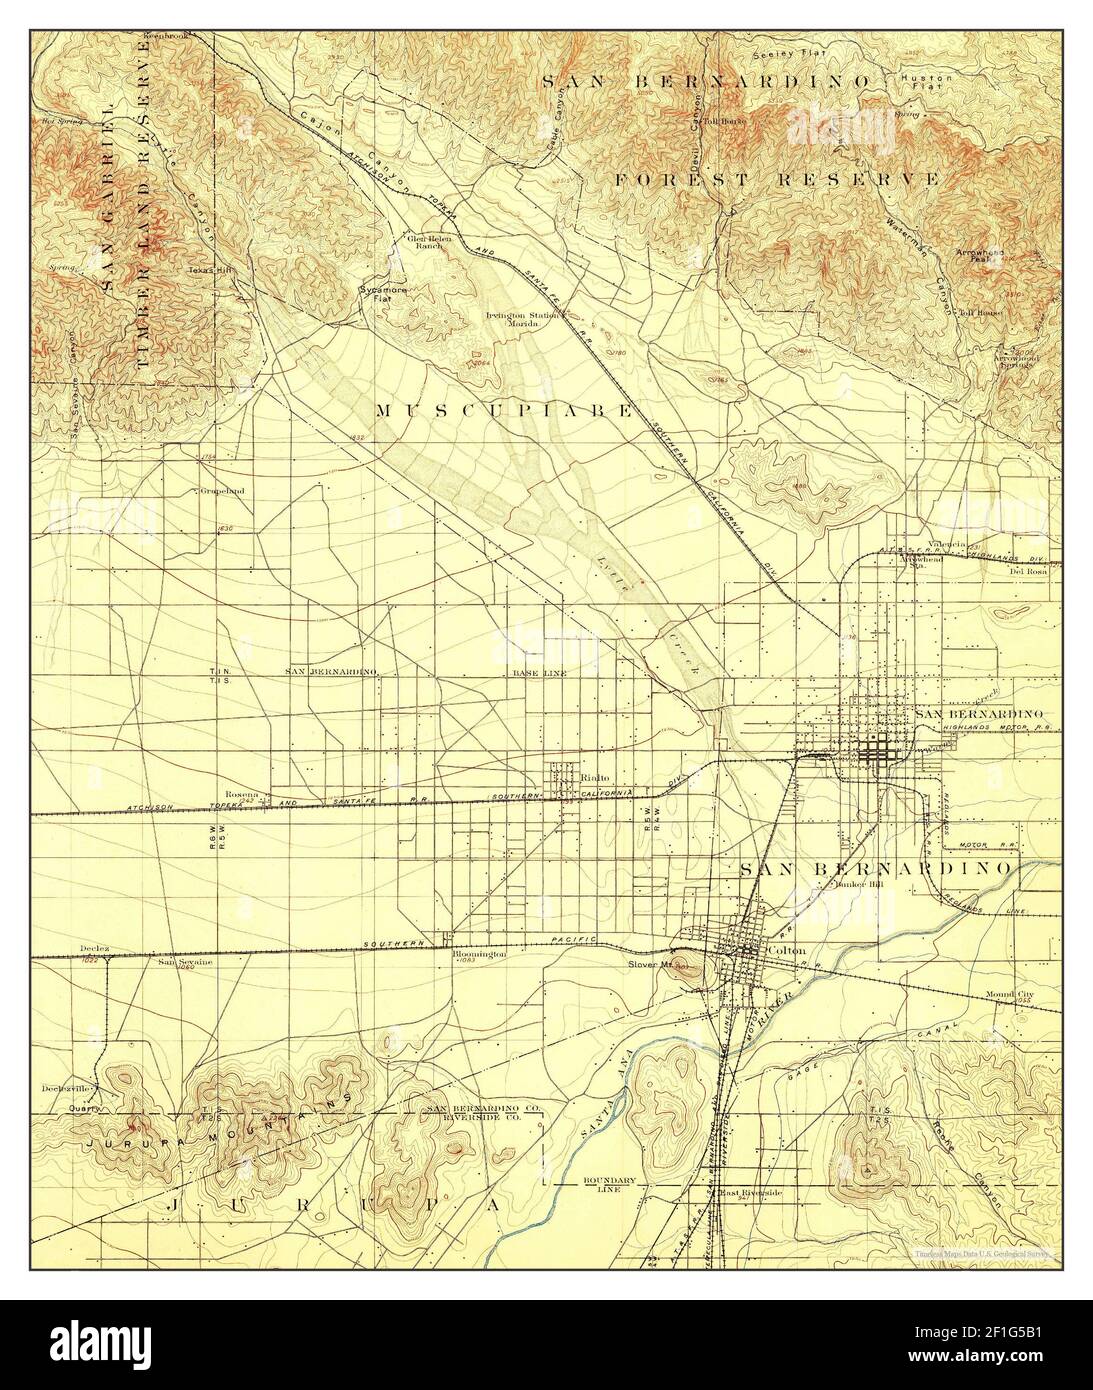 San Bernardino, California, map 1898, 1:62500, United States of America by Timeless Maps, data U.S. Geological Survey Foto Stock